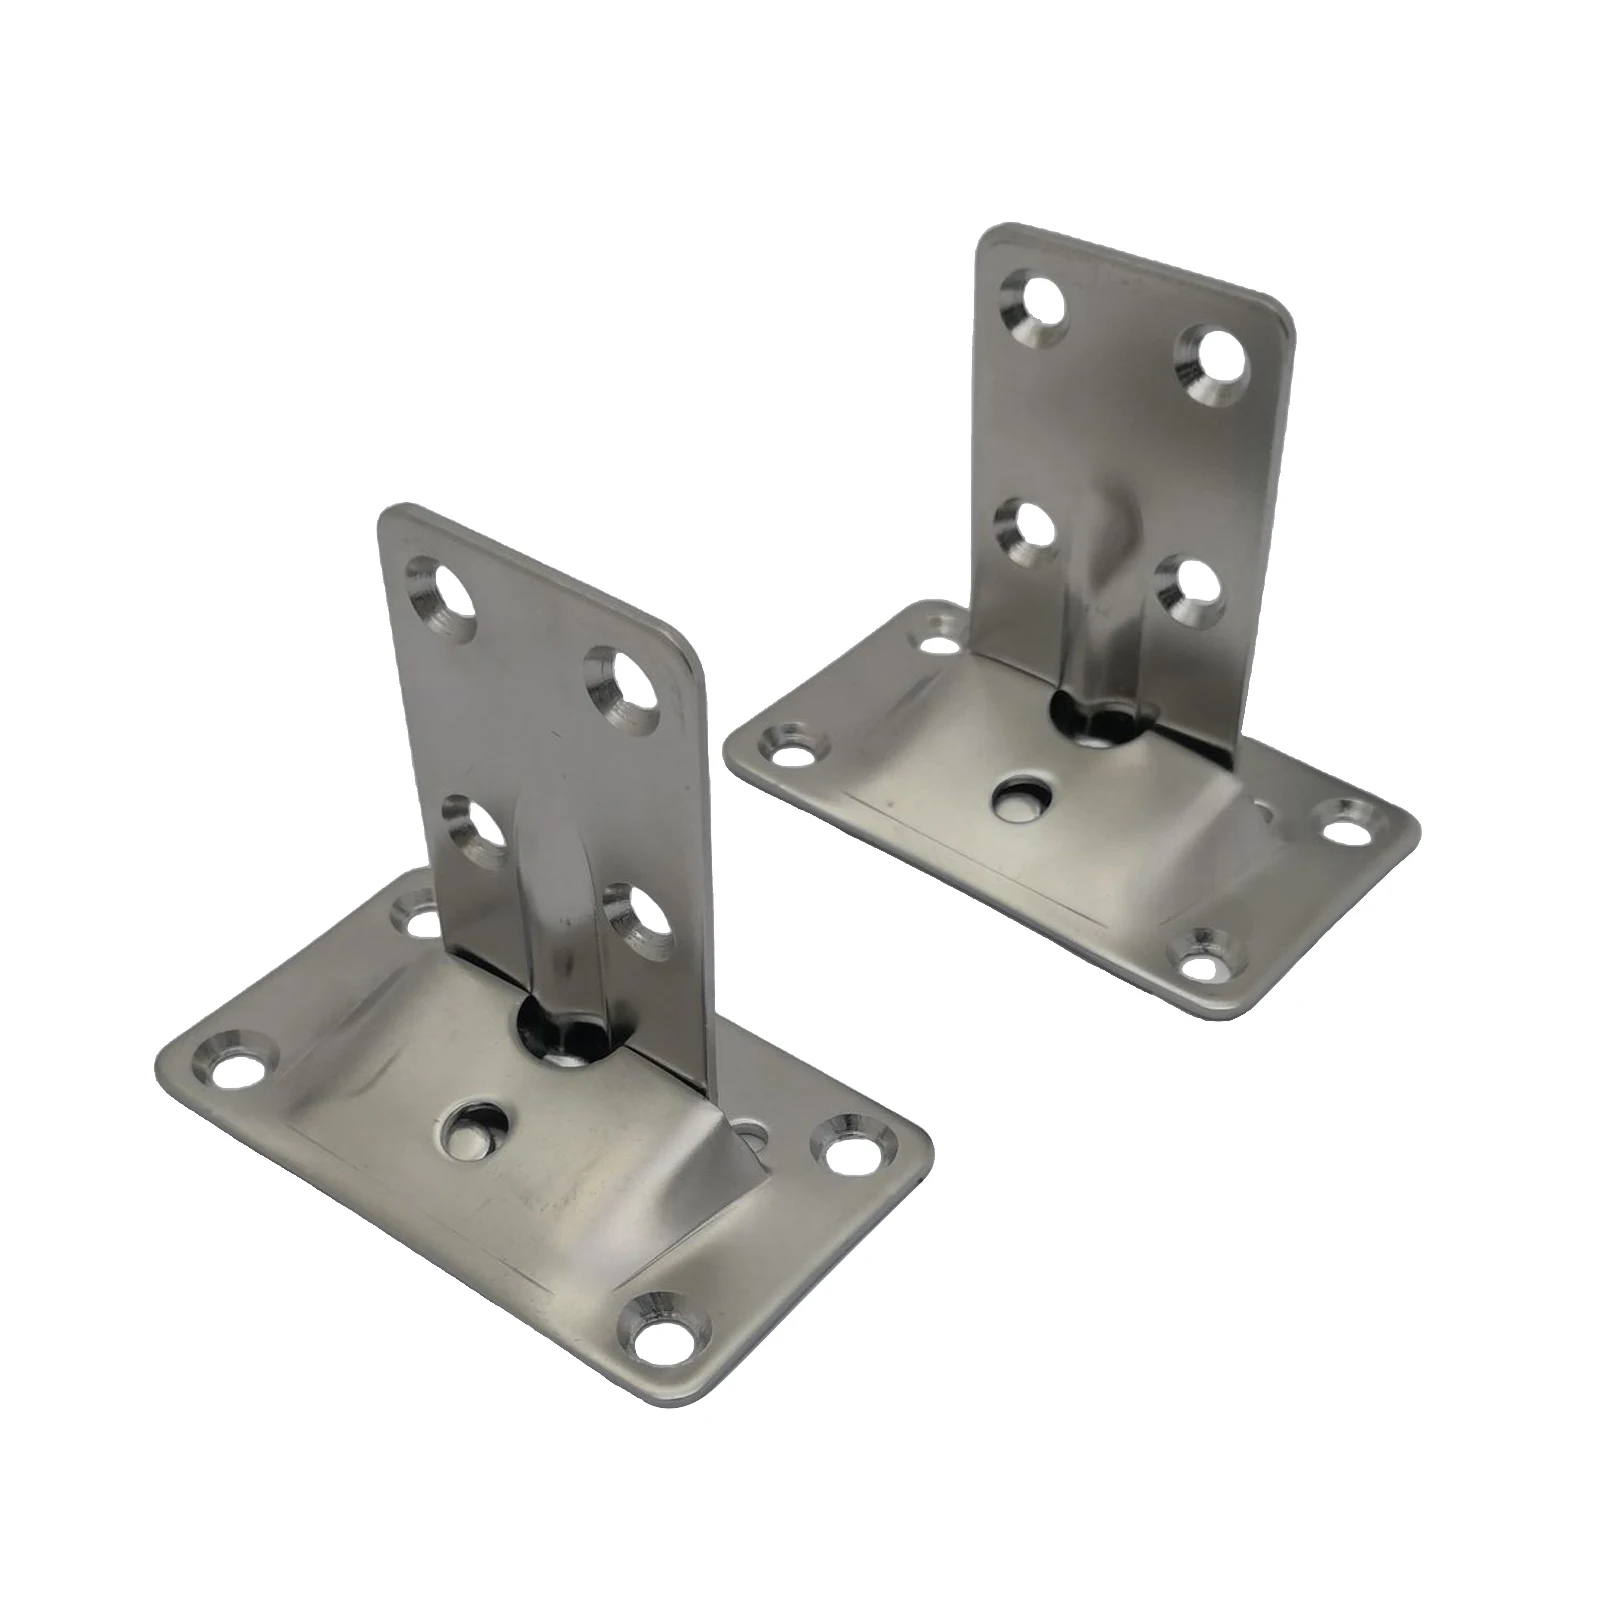 Marine Stainless Steel 304 Table Bracket Sets, Removable Multiple Usage, Marine Accessories Hardware